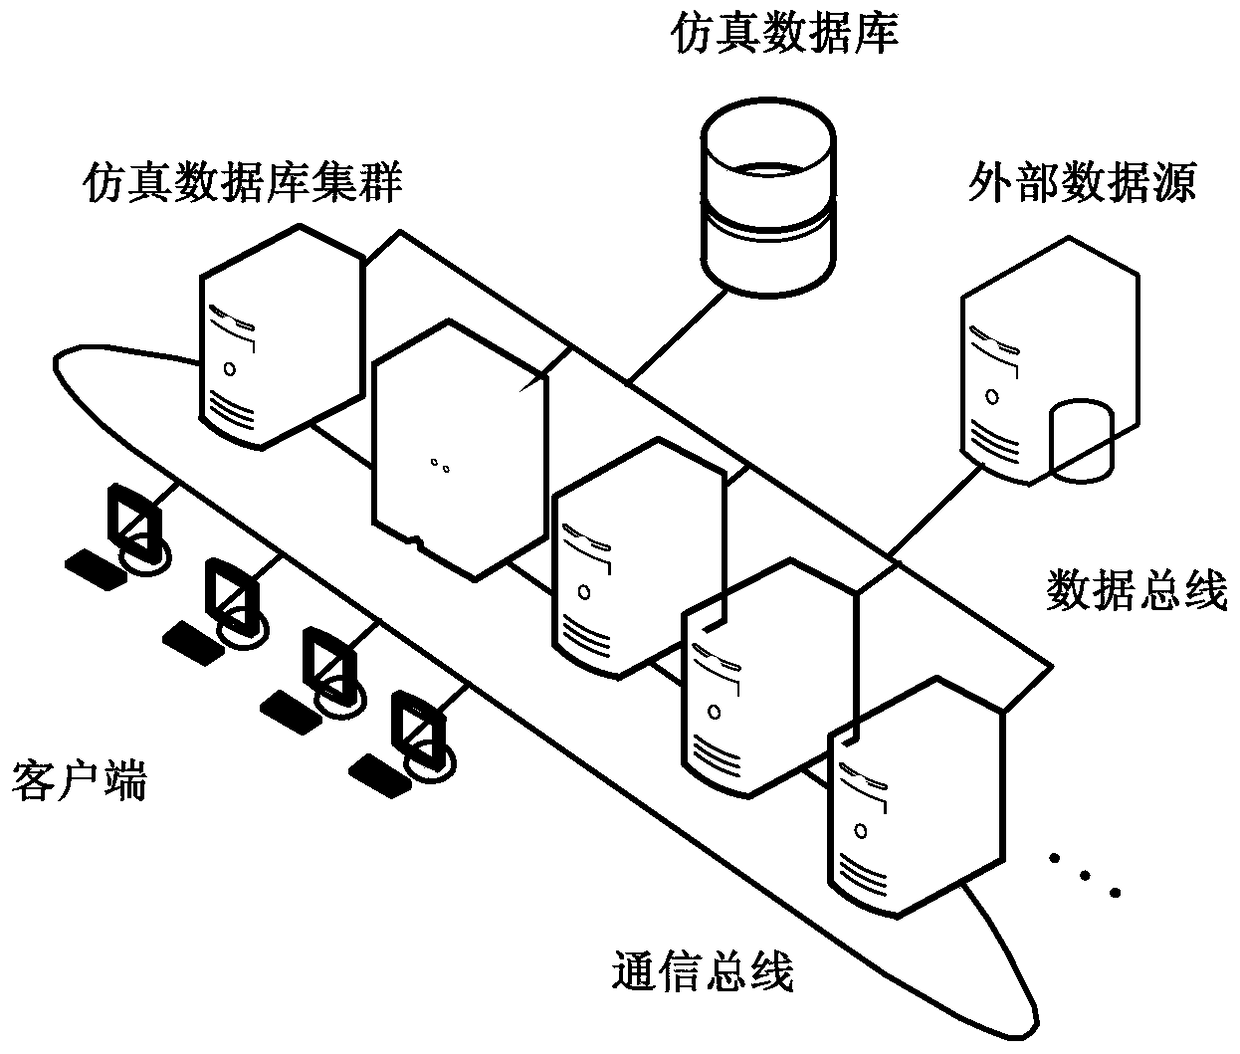 A digital simulation system of distribution network based on dcom